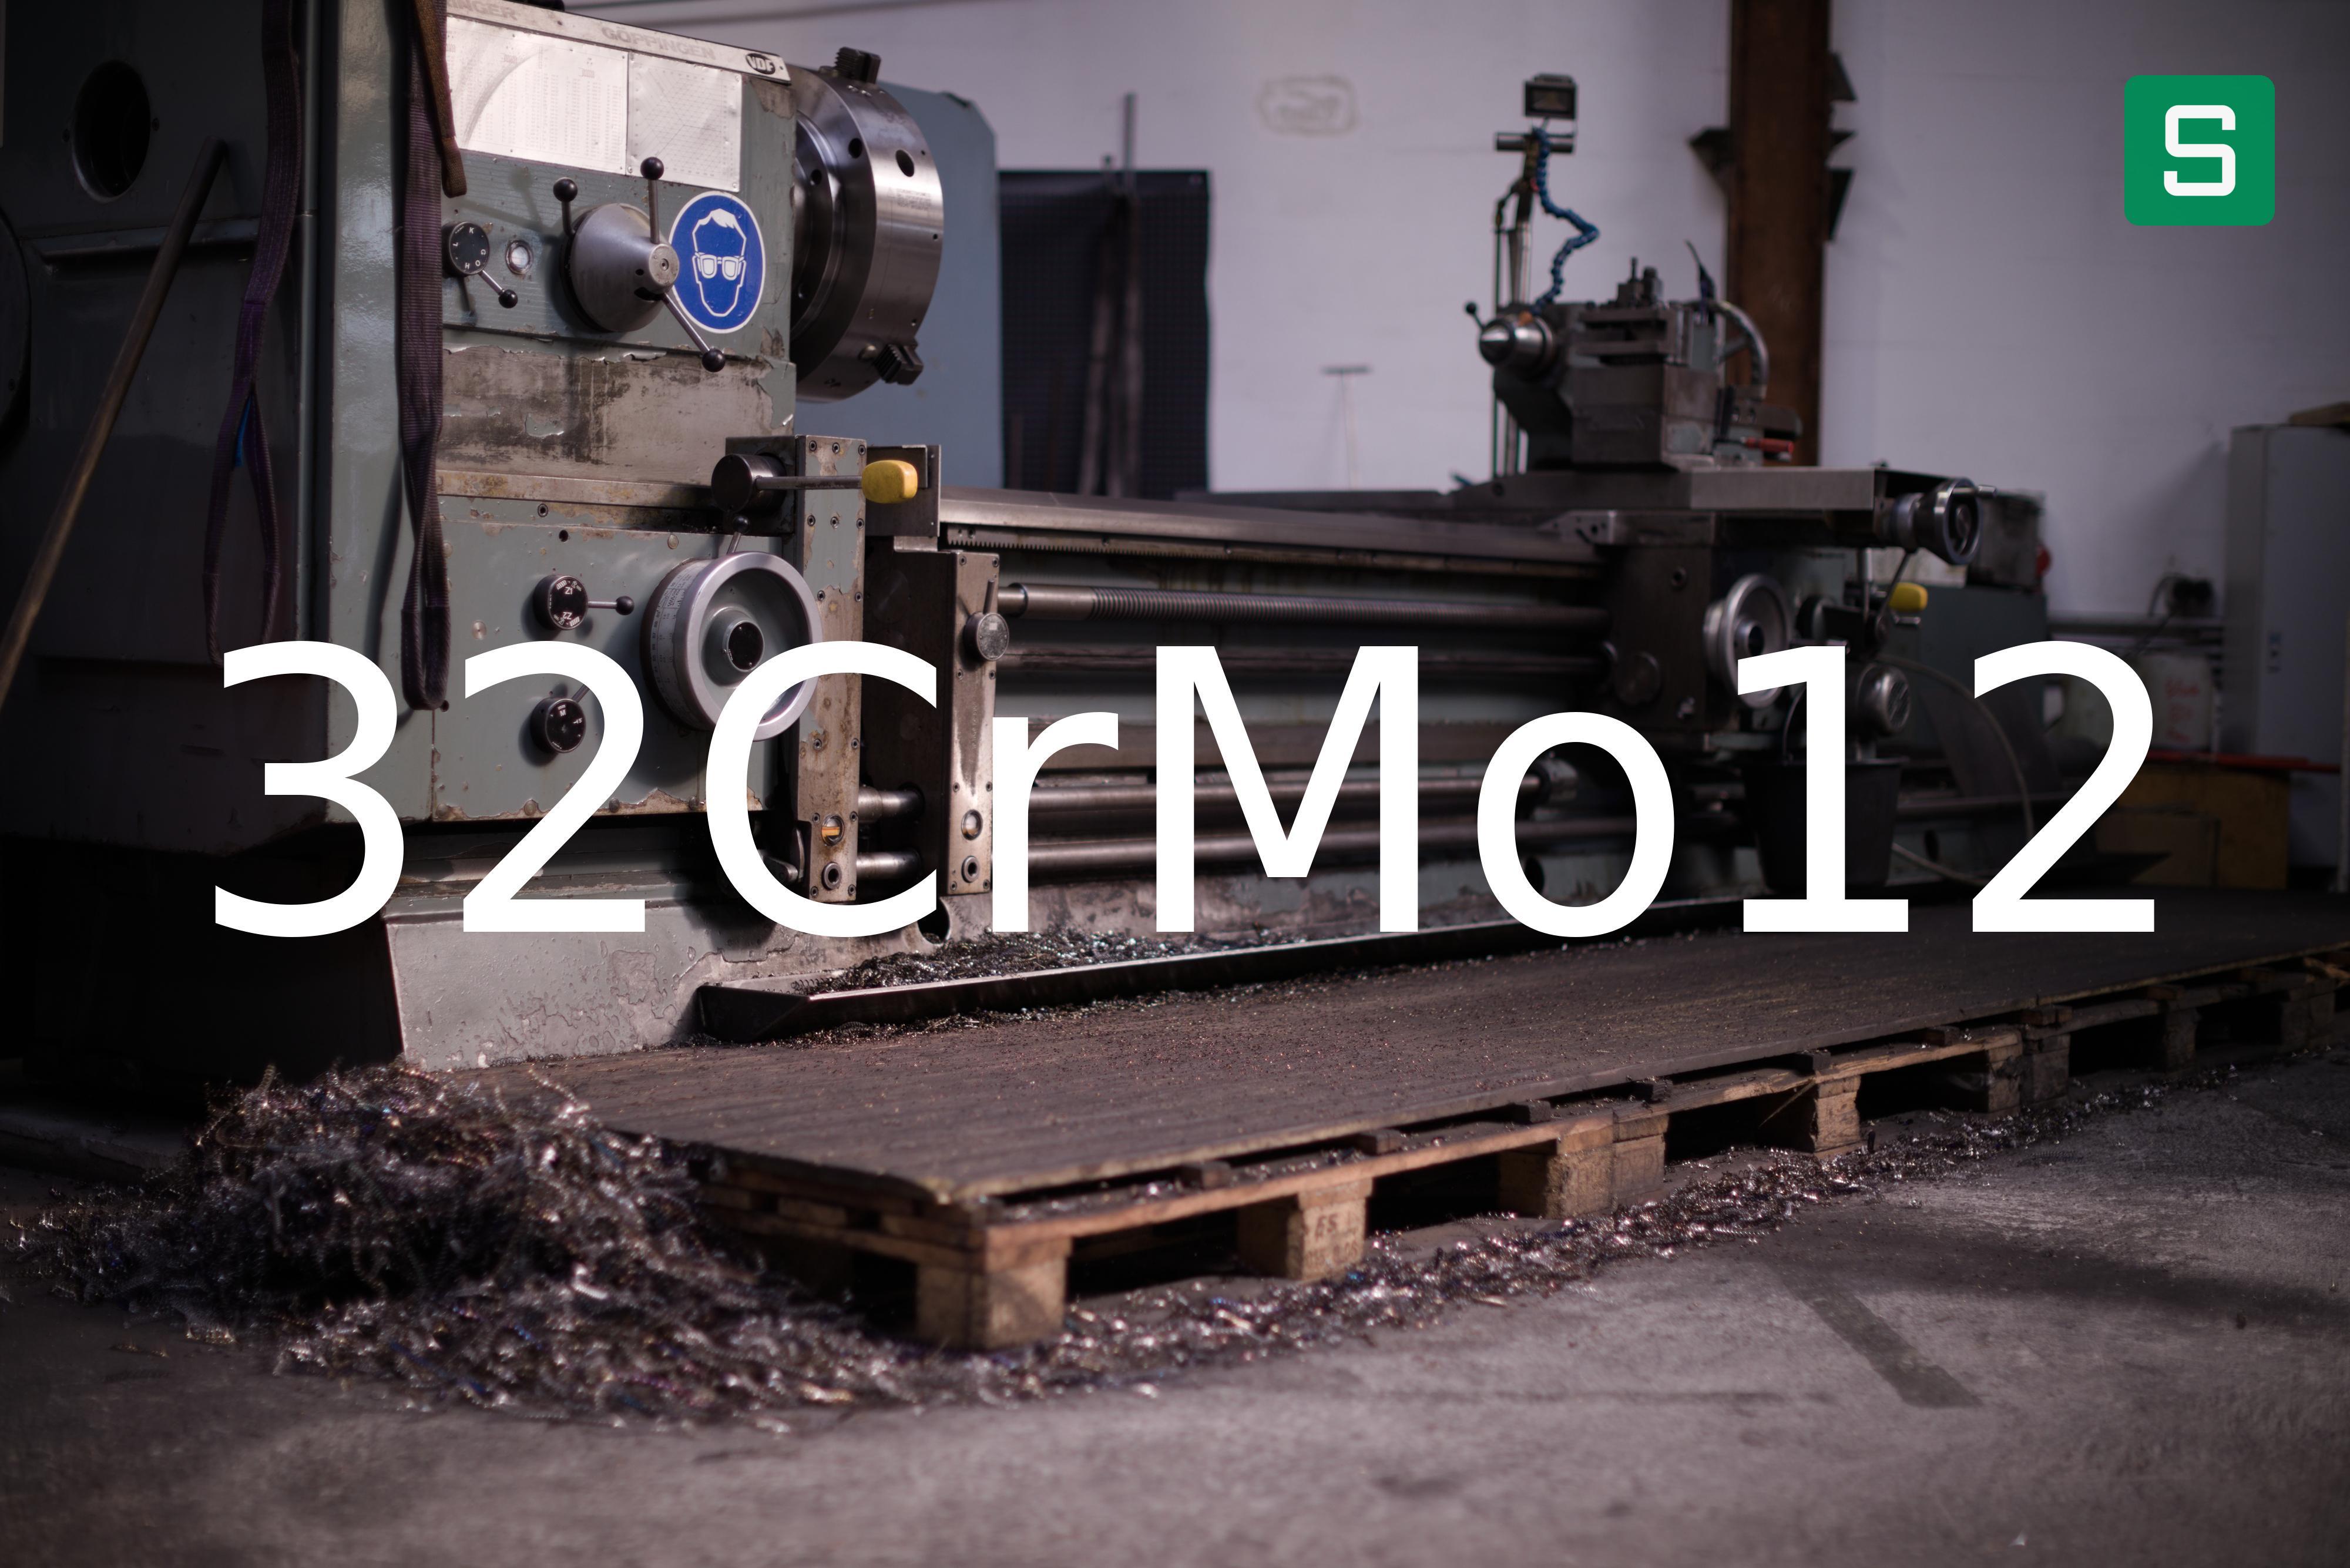 Steel Material: 32CrMo12